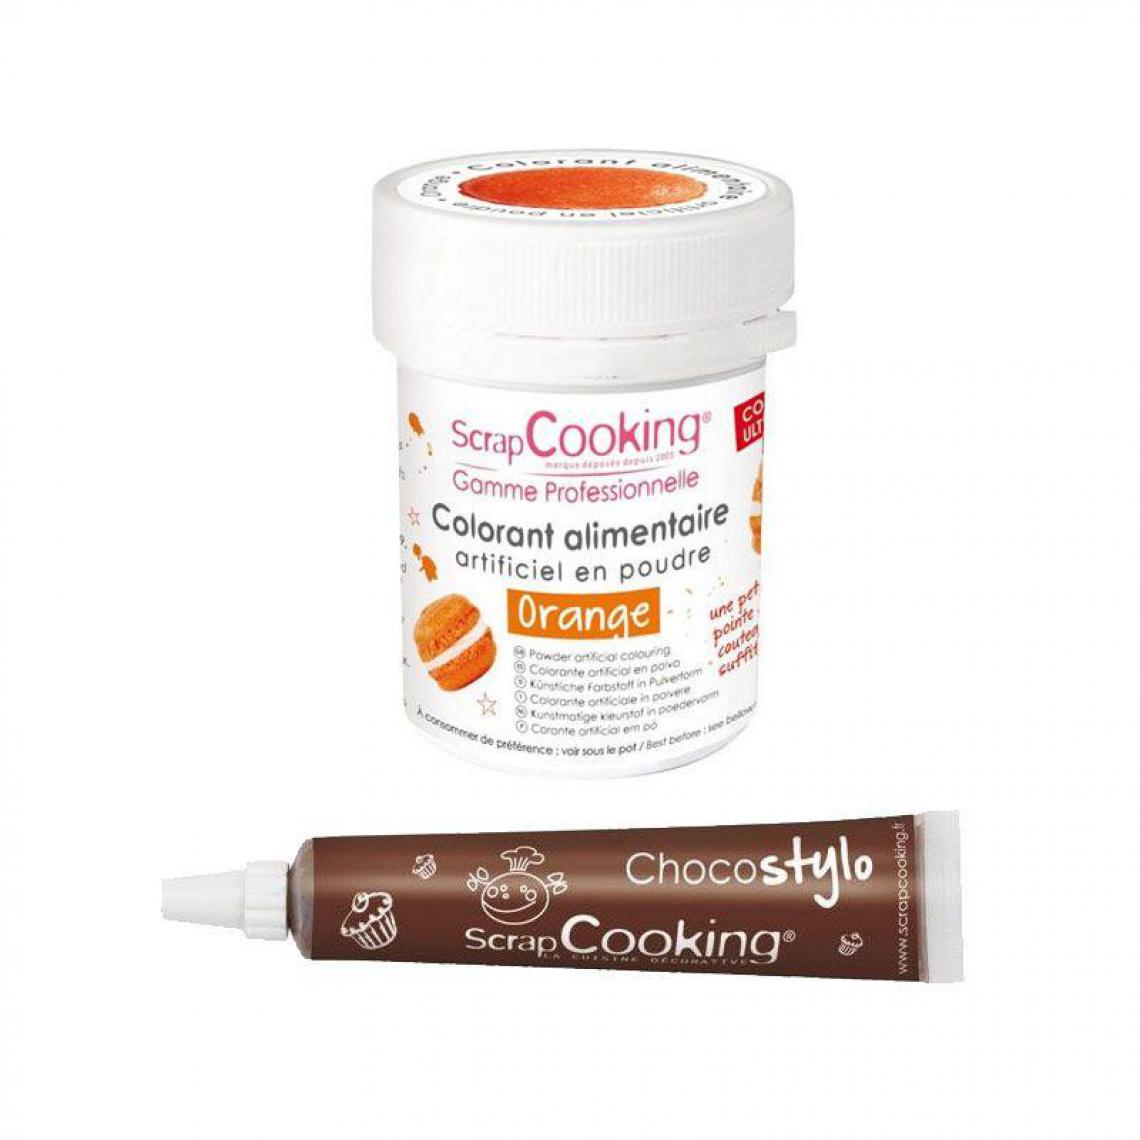 Scrapcooking - Colorant alimentaire Orange + Stylo chocolat - Kits créatifs